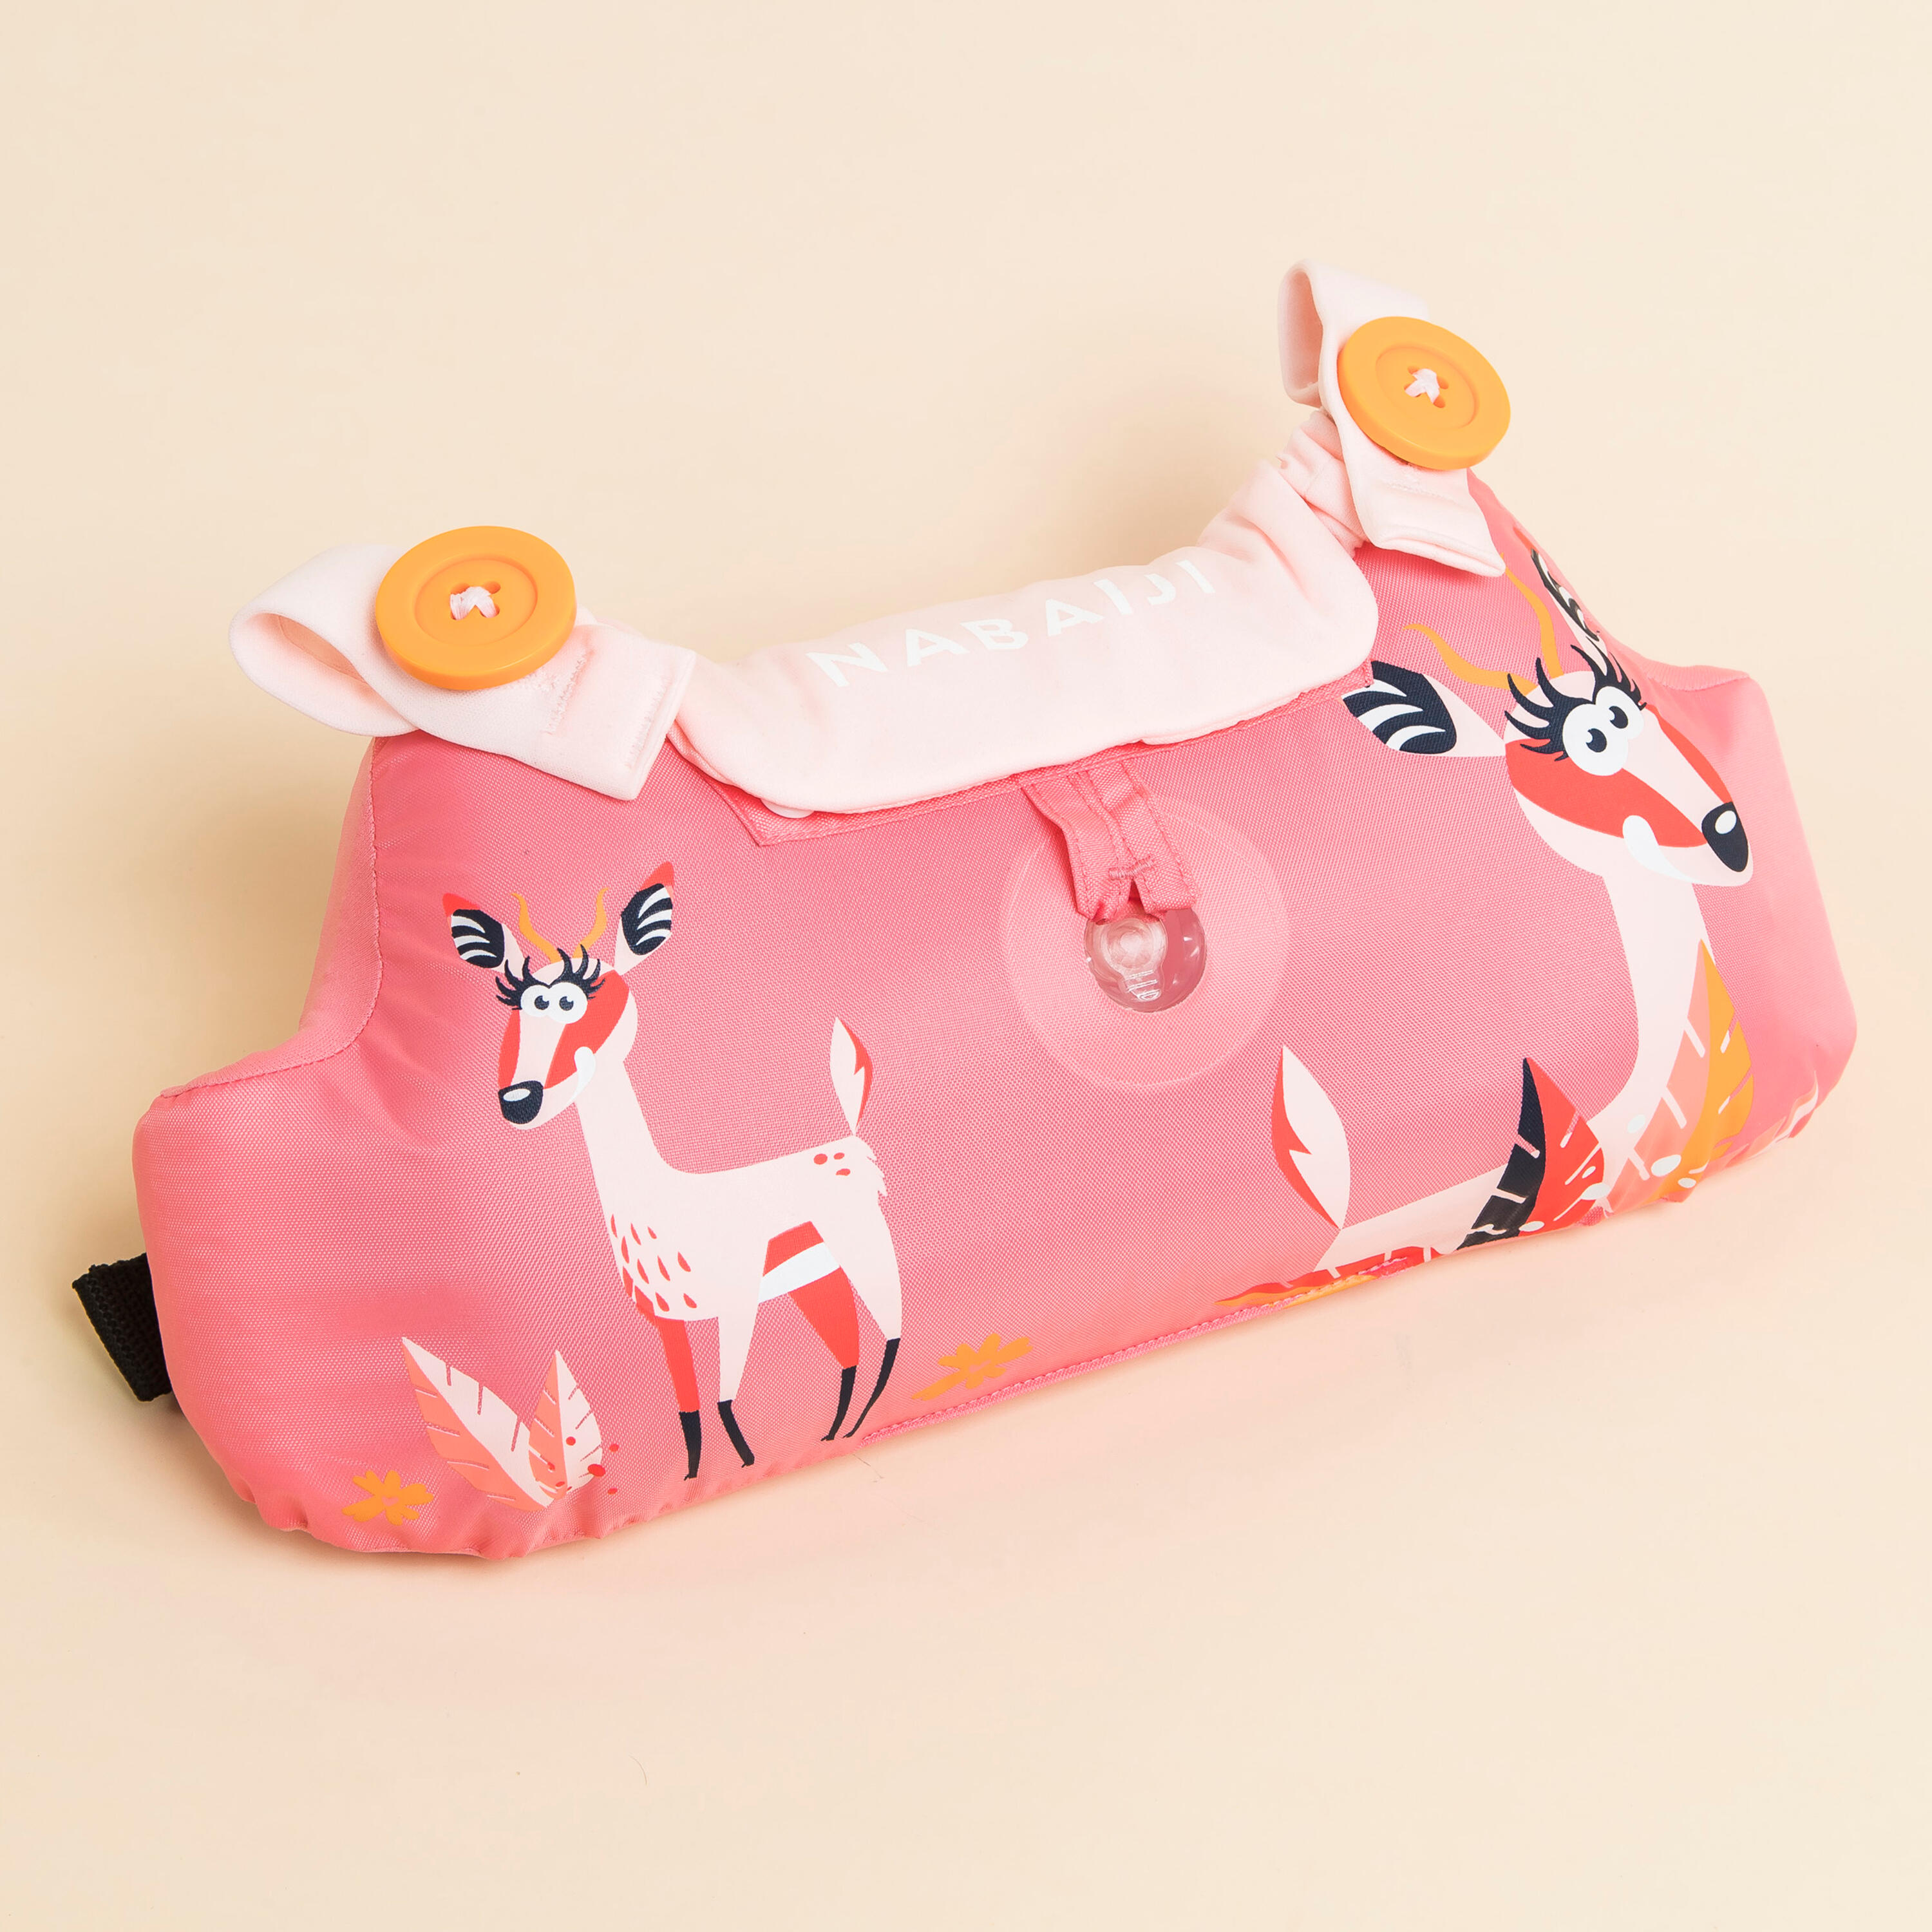 Kids’ Swimming Adjustable Pool Armbands-waistband 15 to 30 kg TISWIM “Gazelle” pink 5/7